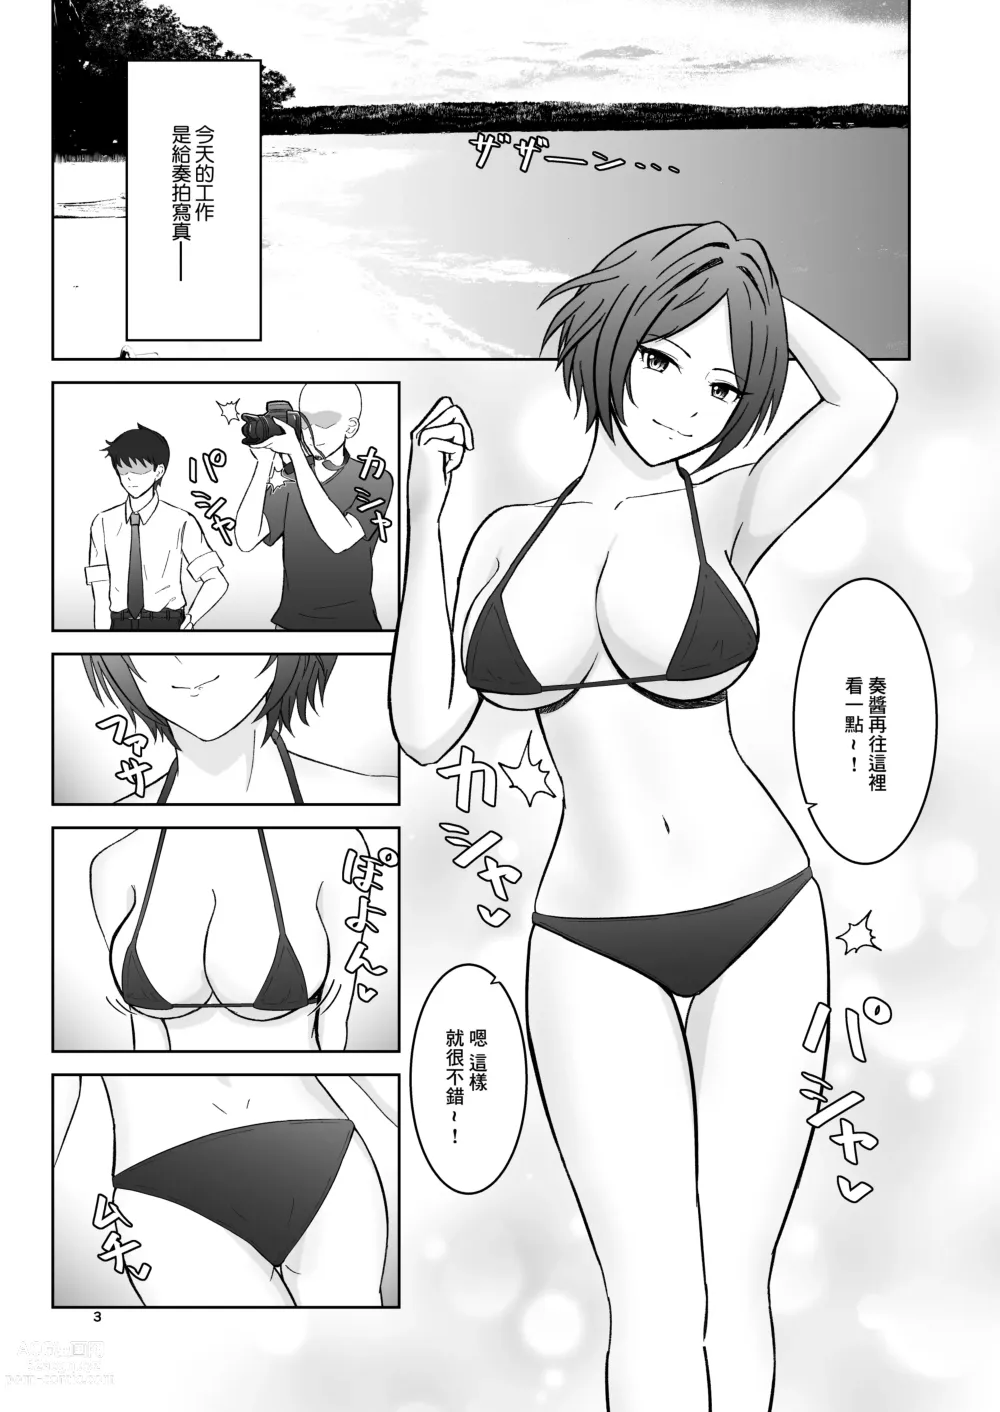 Page 3 of doujinshi 被奏的胸部盡情包裹